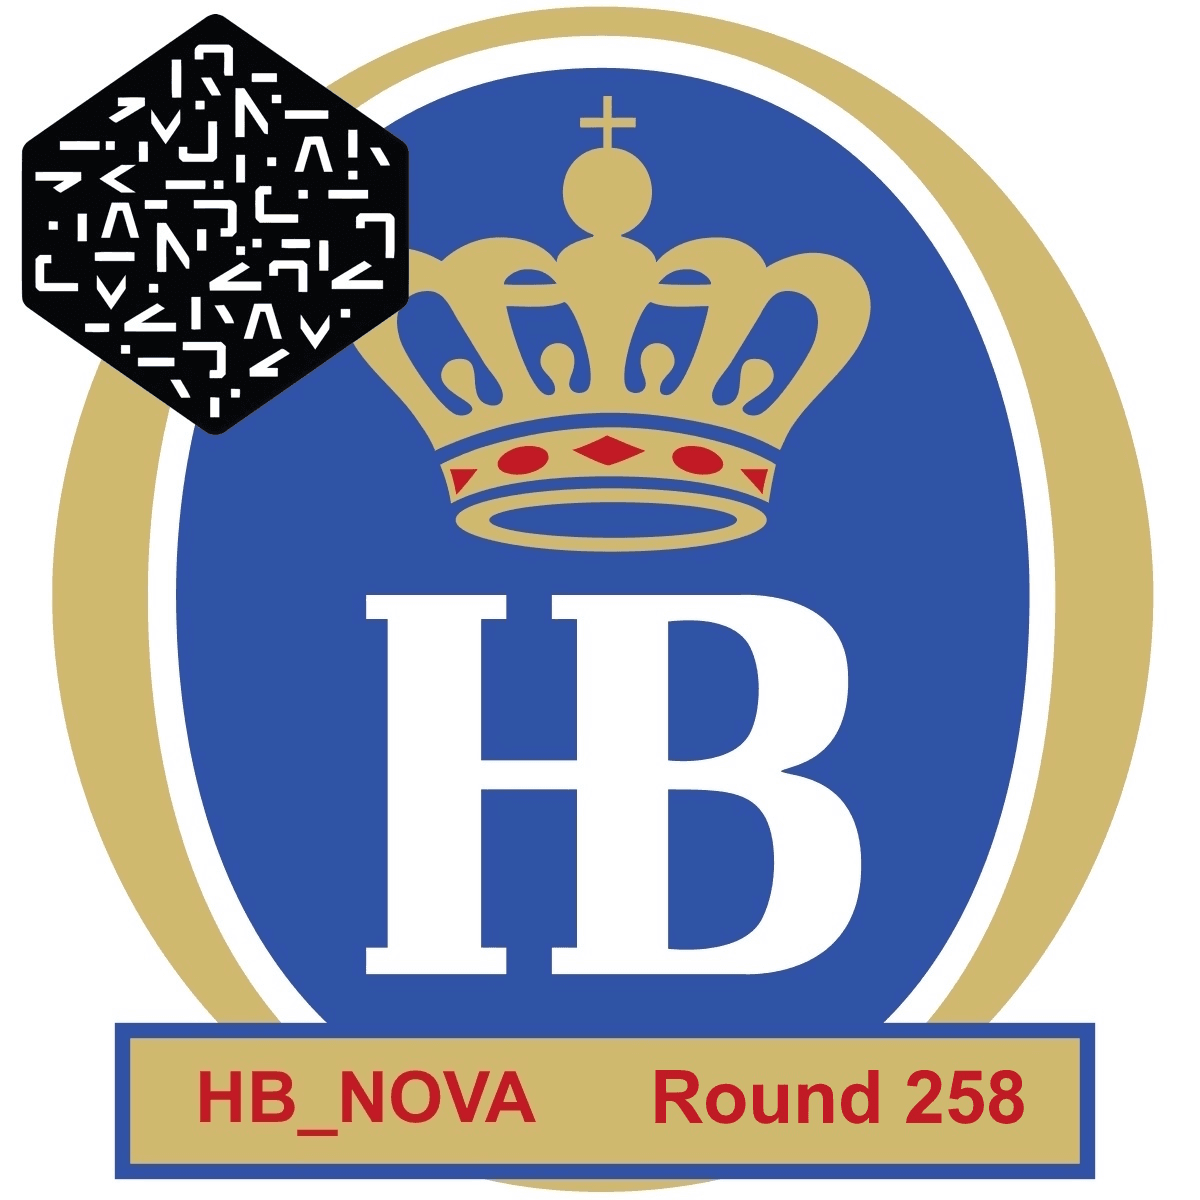 HB_NOVA Round 258 Numerai